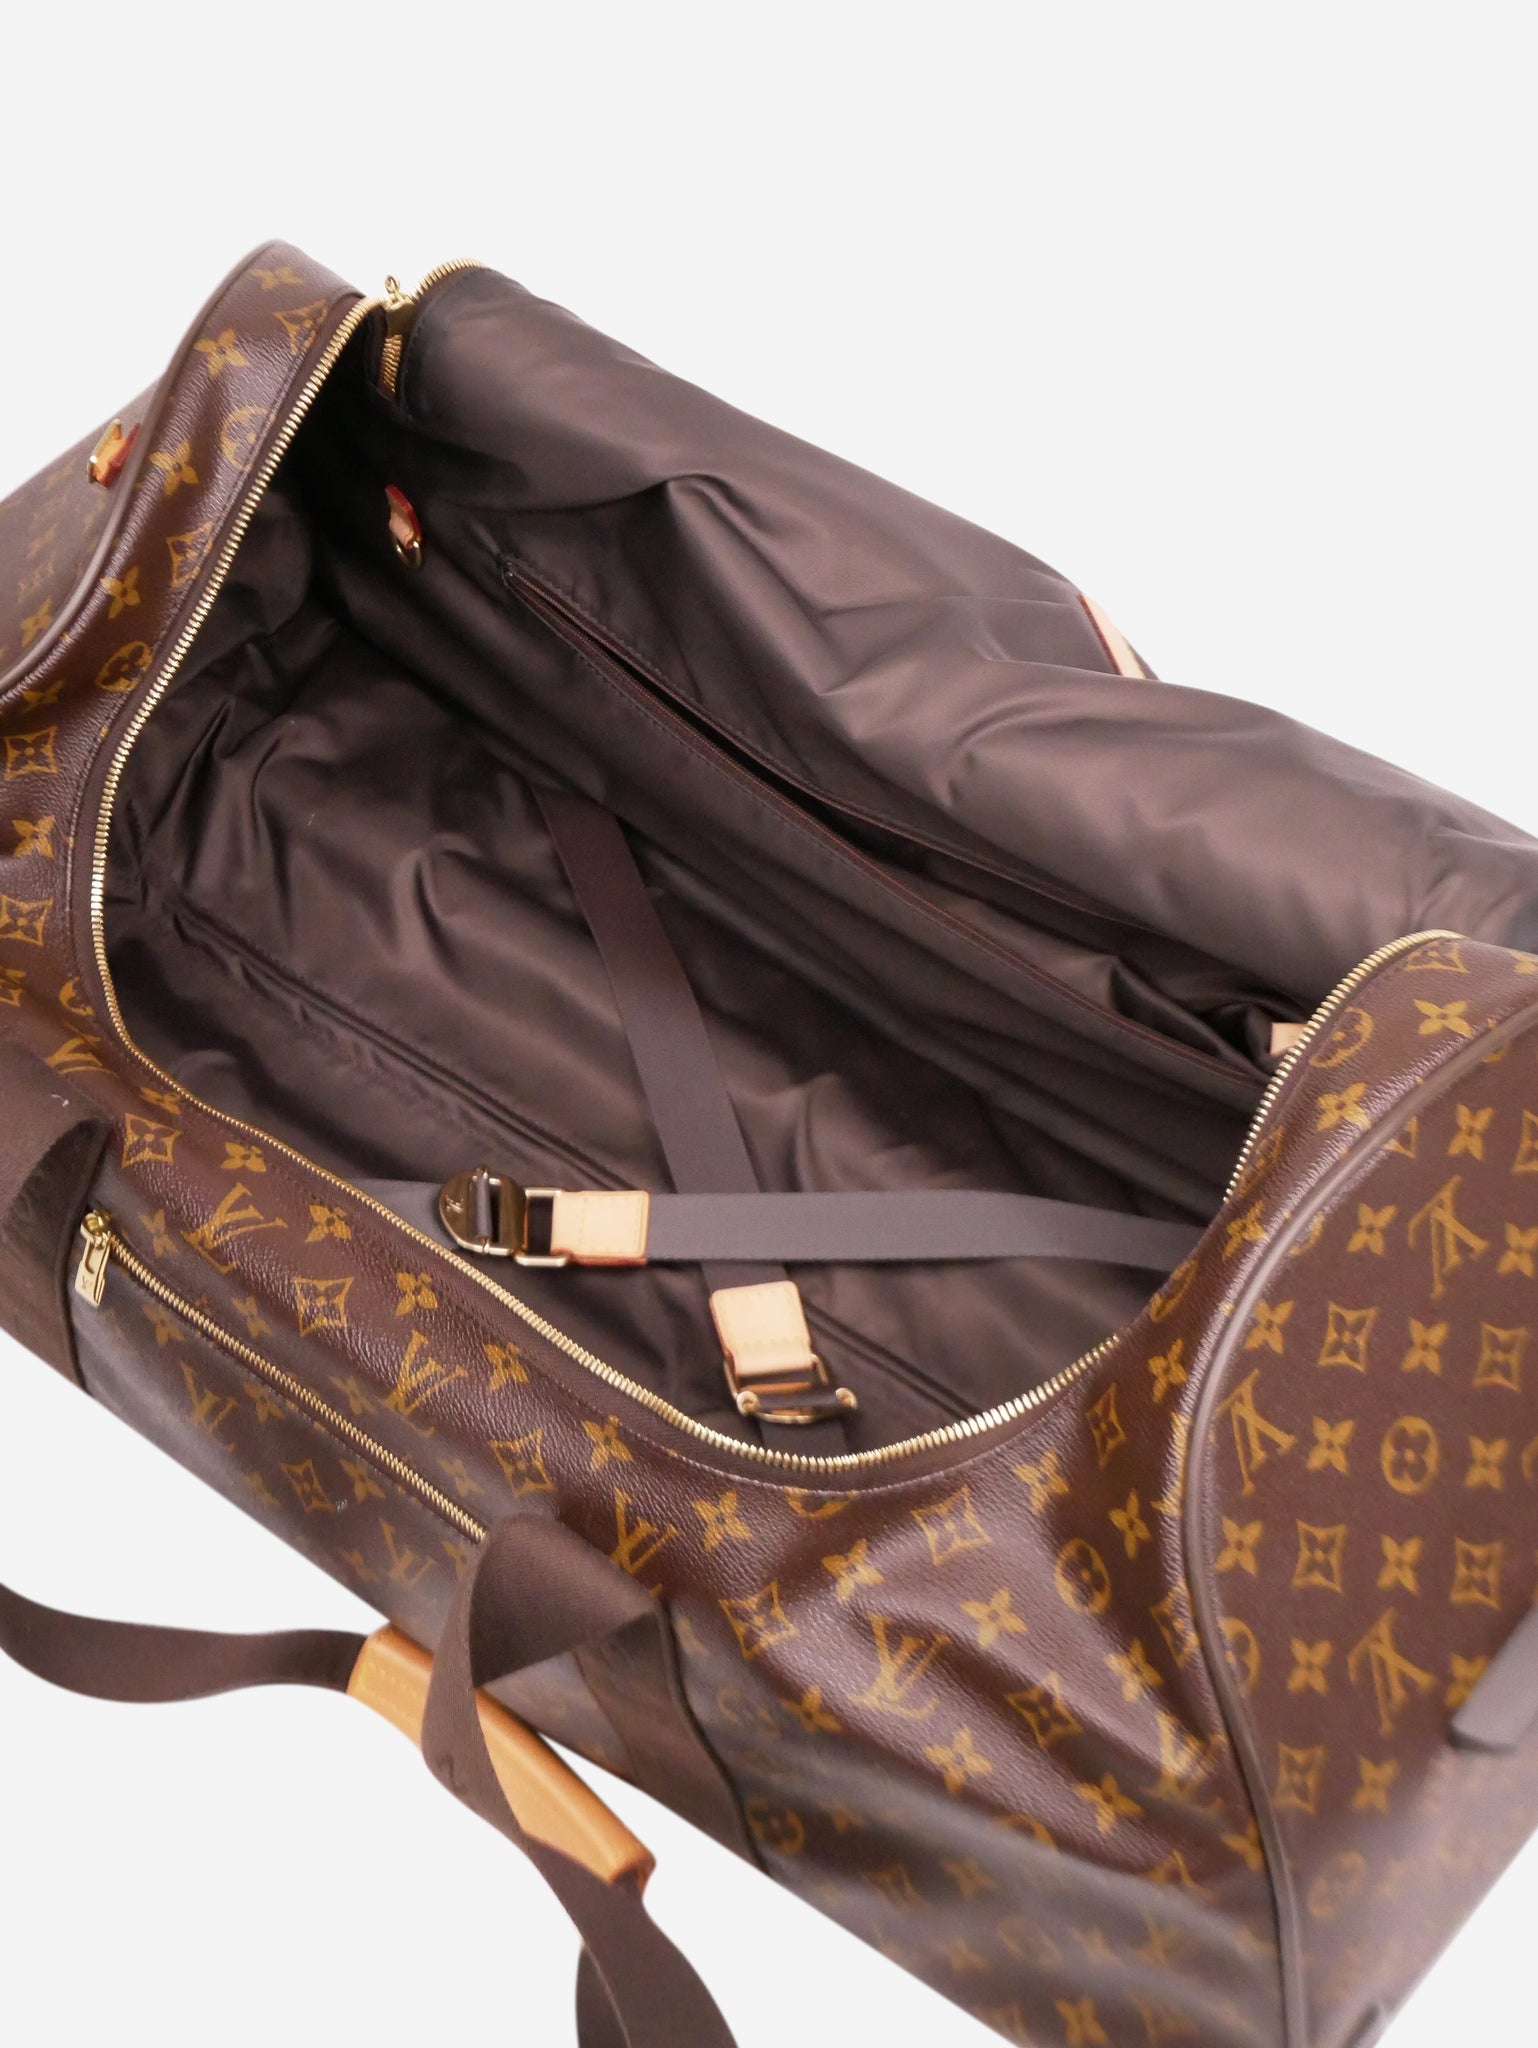 Louis Vuitton pre-owned brown 2014 Monogram duffle suitcase